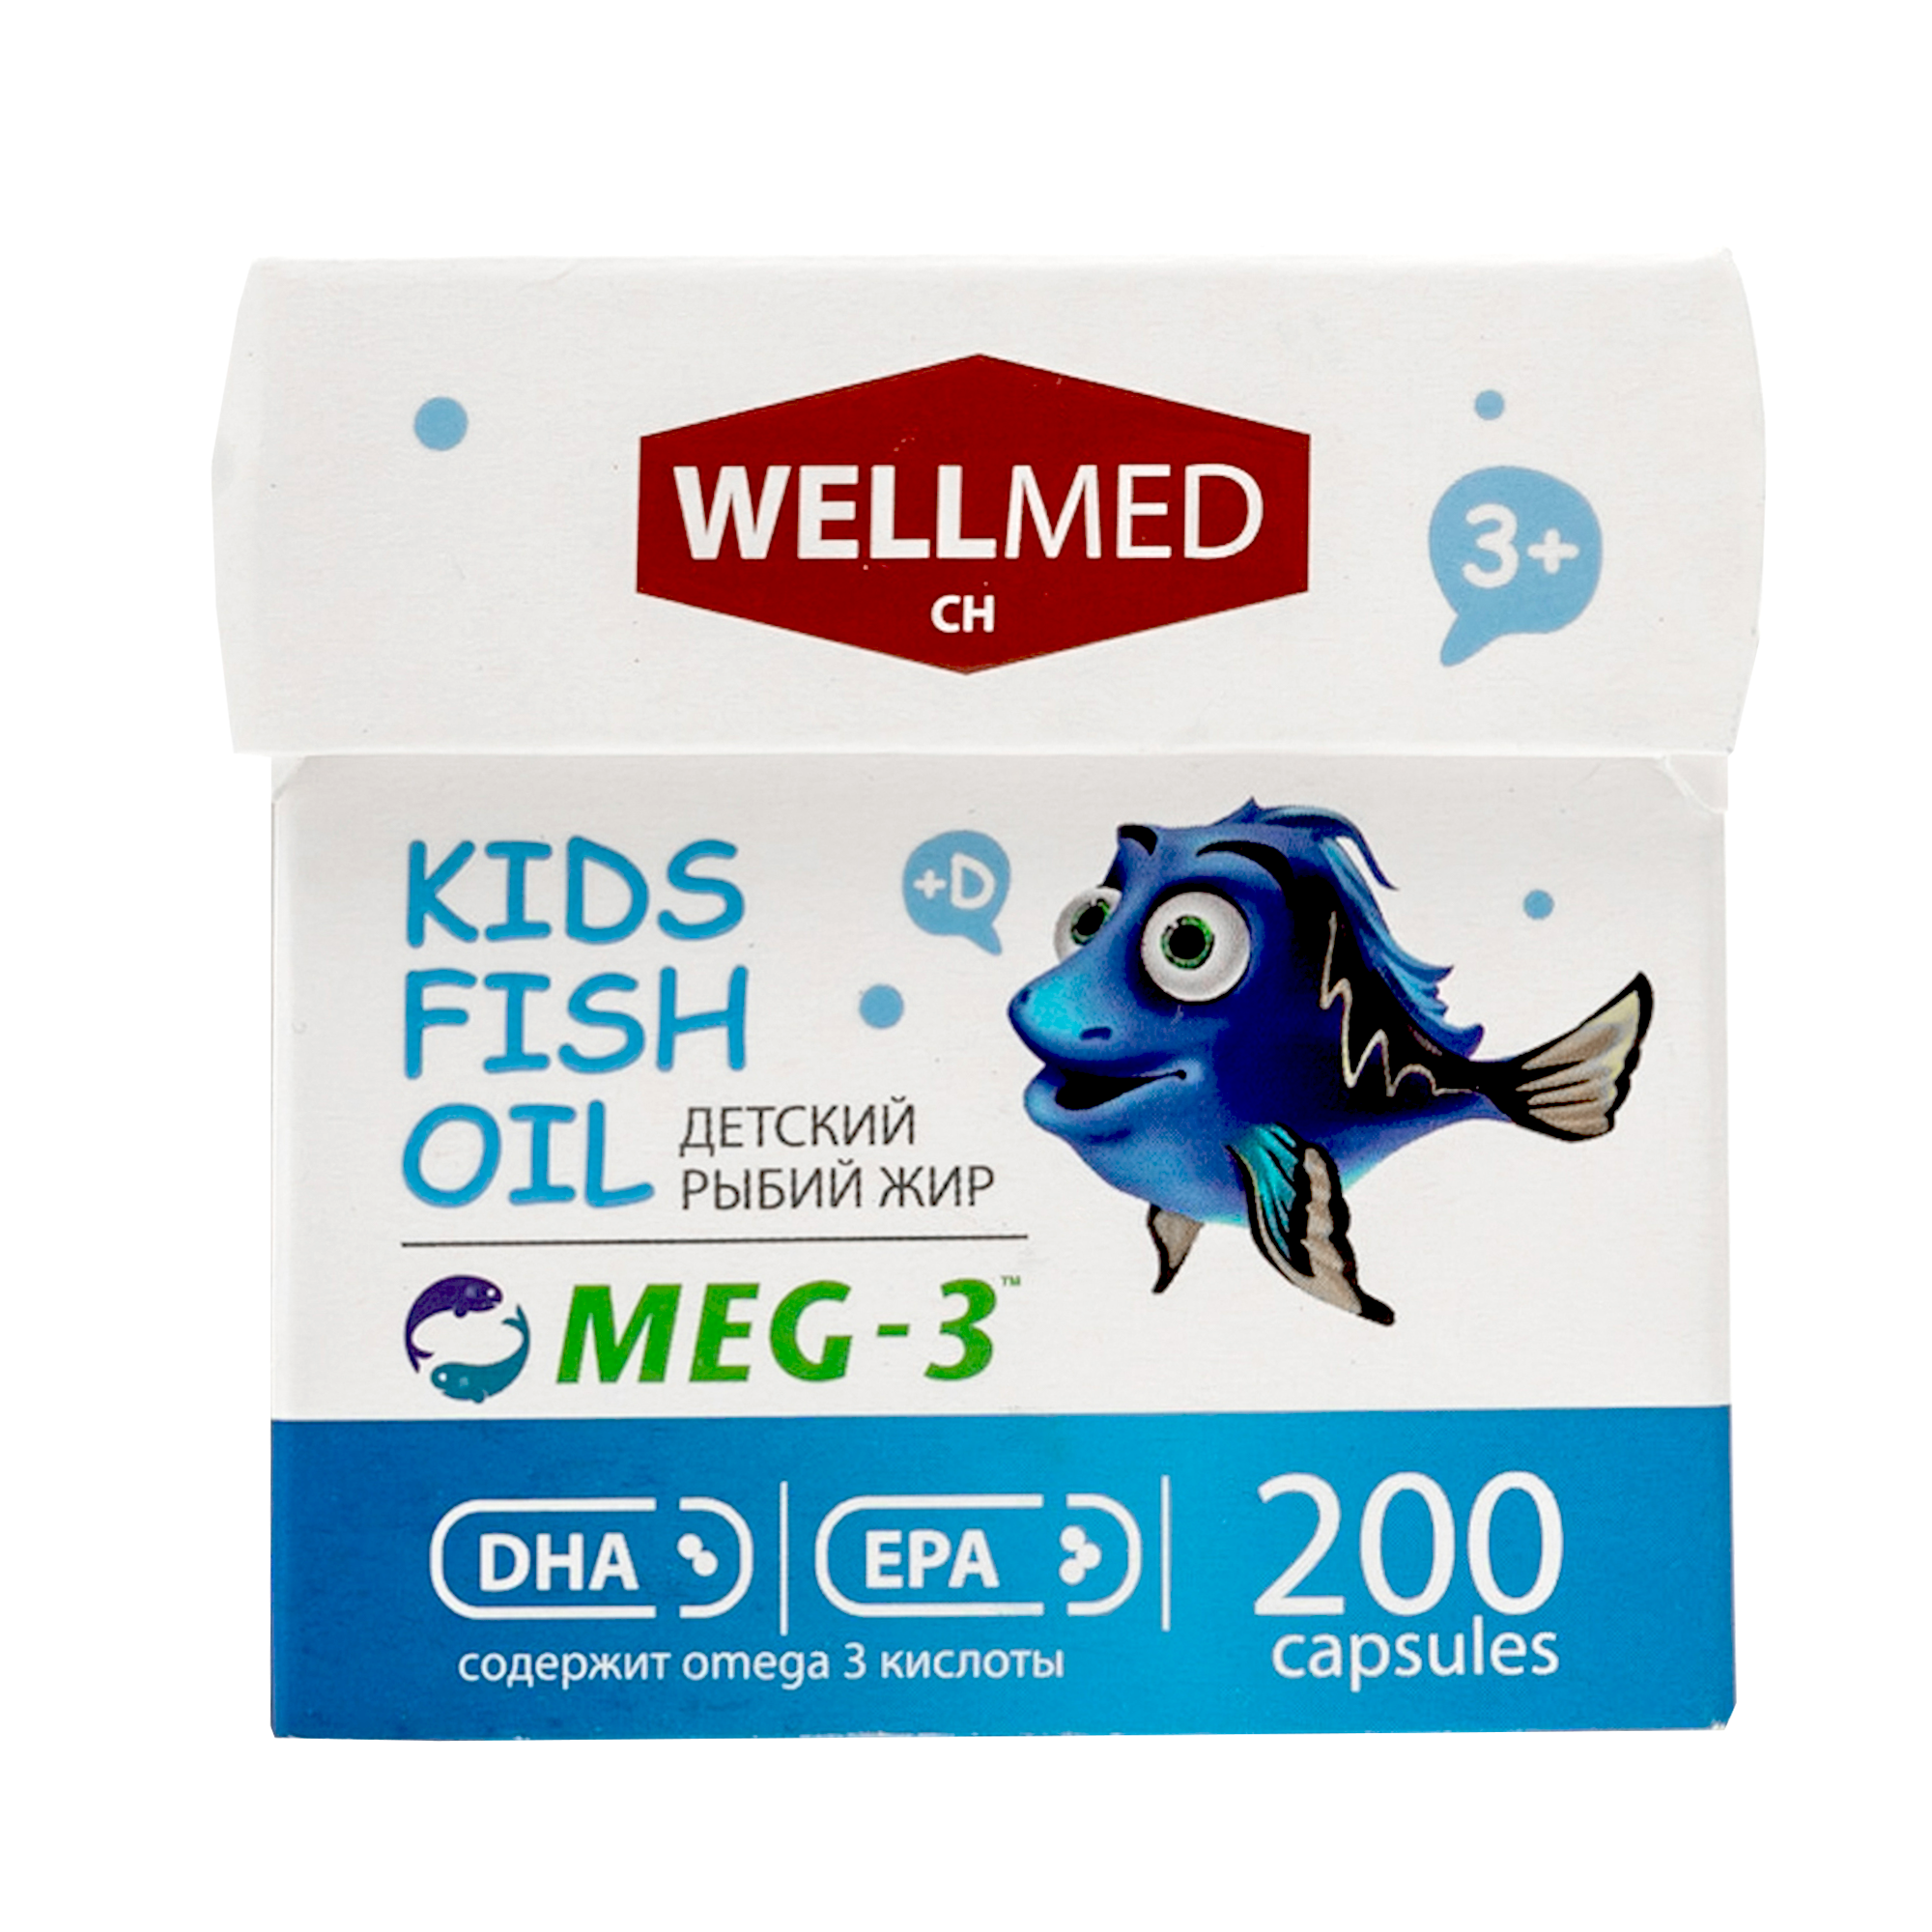 Концентрат OMEGA 3 для детей WELLMED Детский рыбий жир с витамином Д 200 капсул 3+ - фото 11